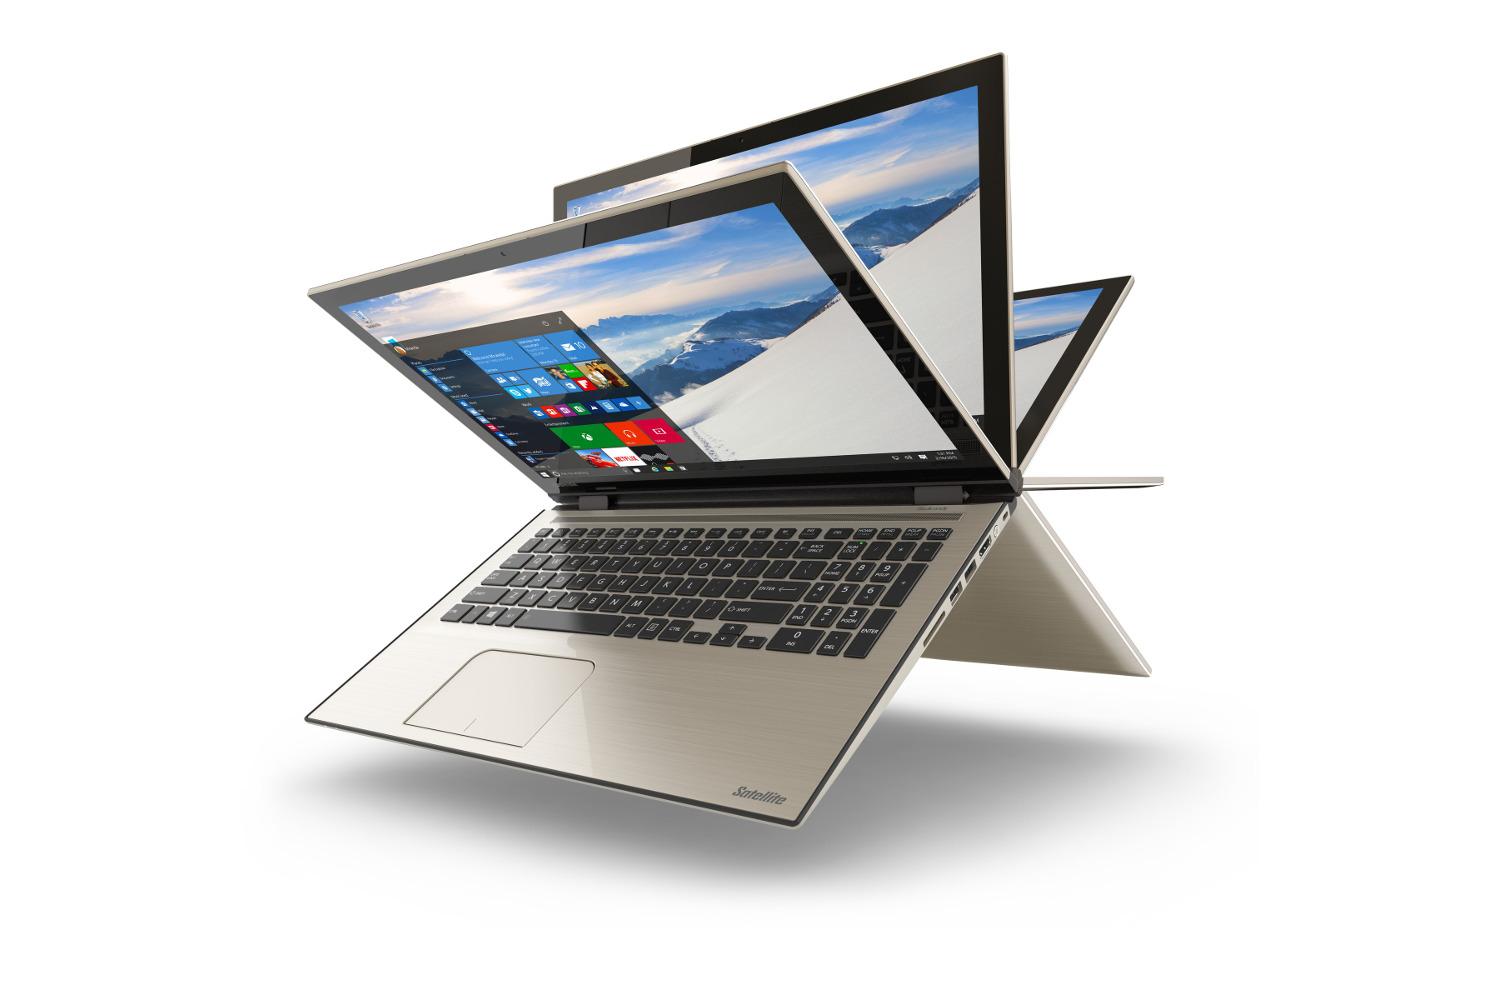 toshiba details new satellite laptops designed for windows 10 fusion 15 l55w angle5